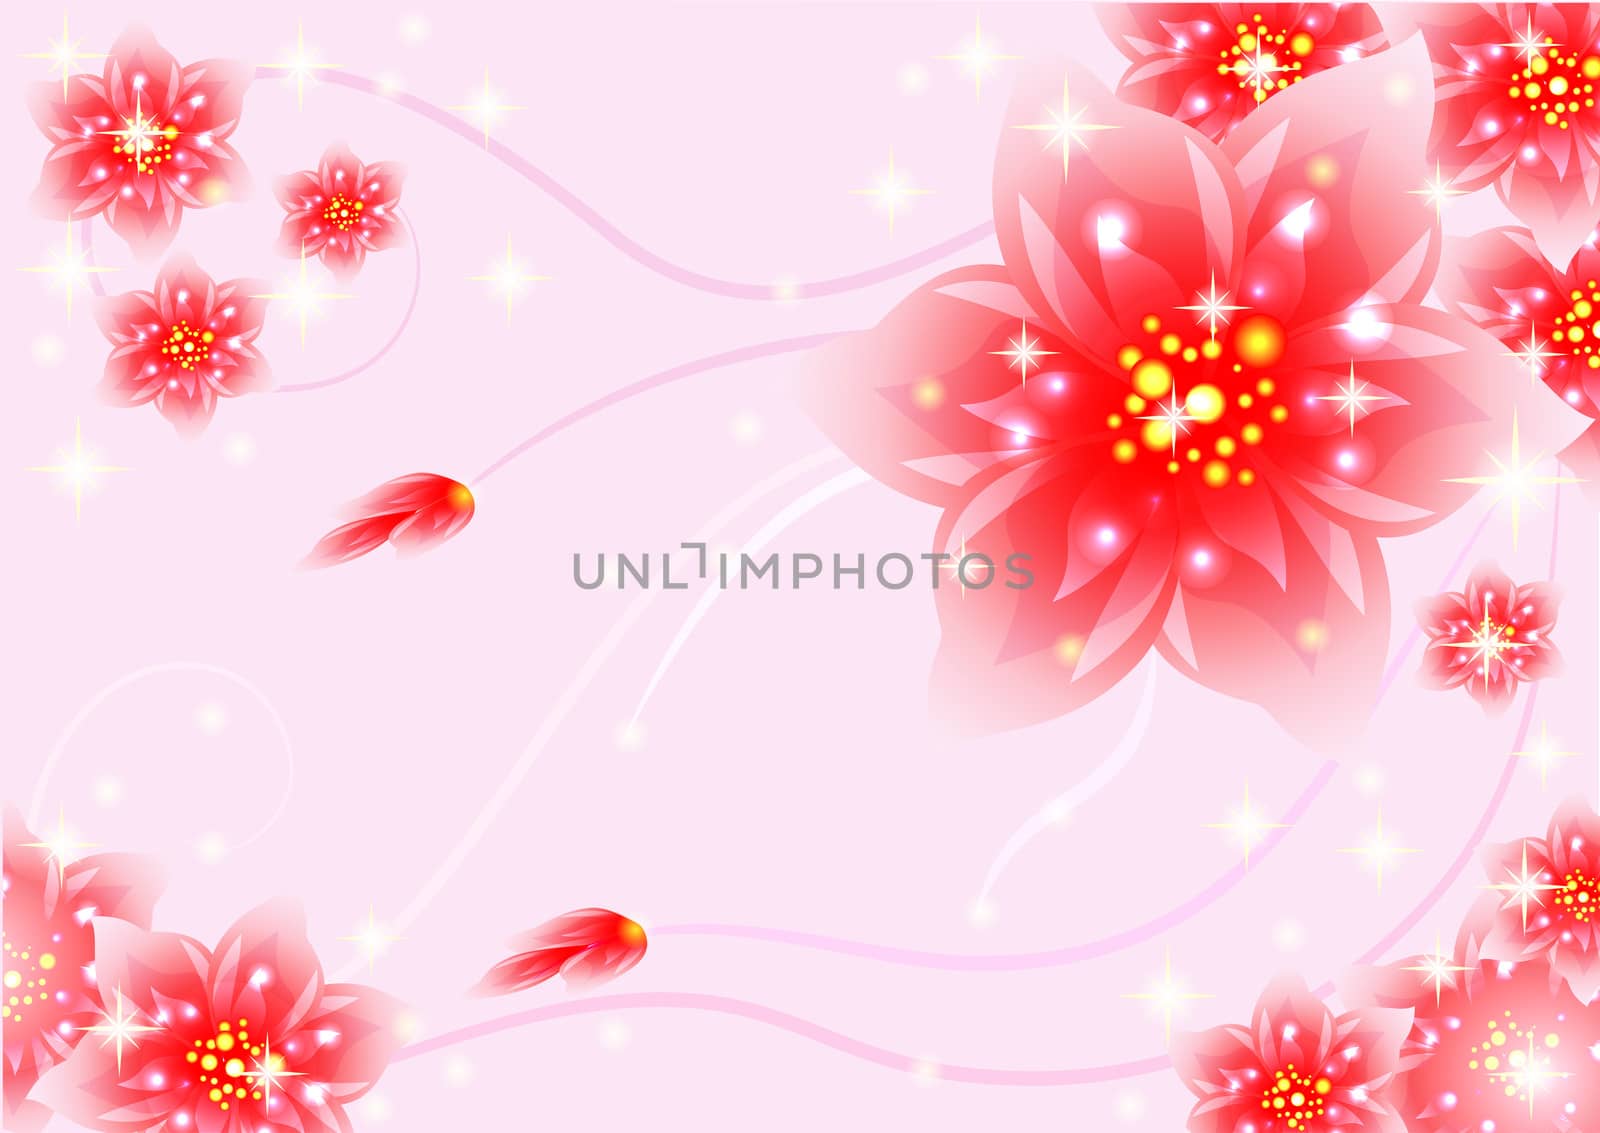 vtropical summer flower,mirror effect vector pattern background